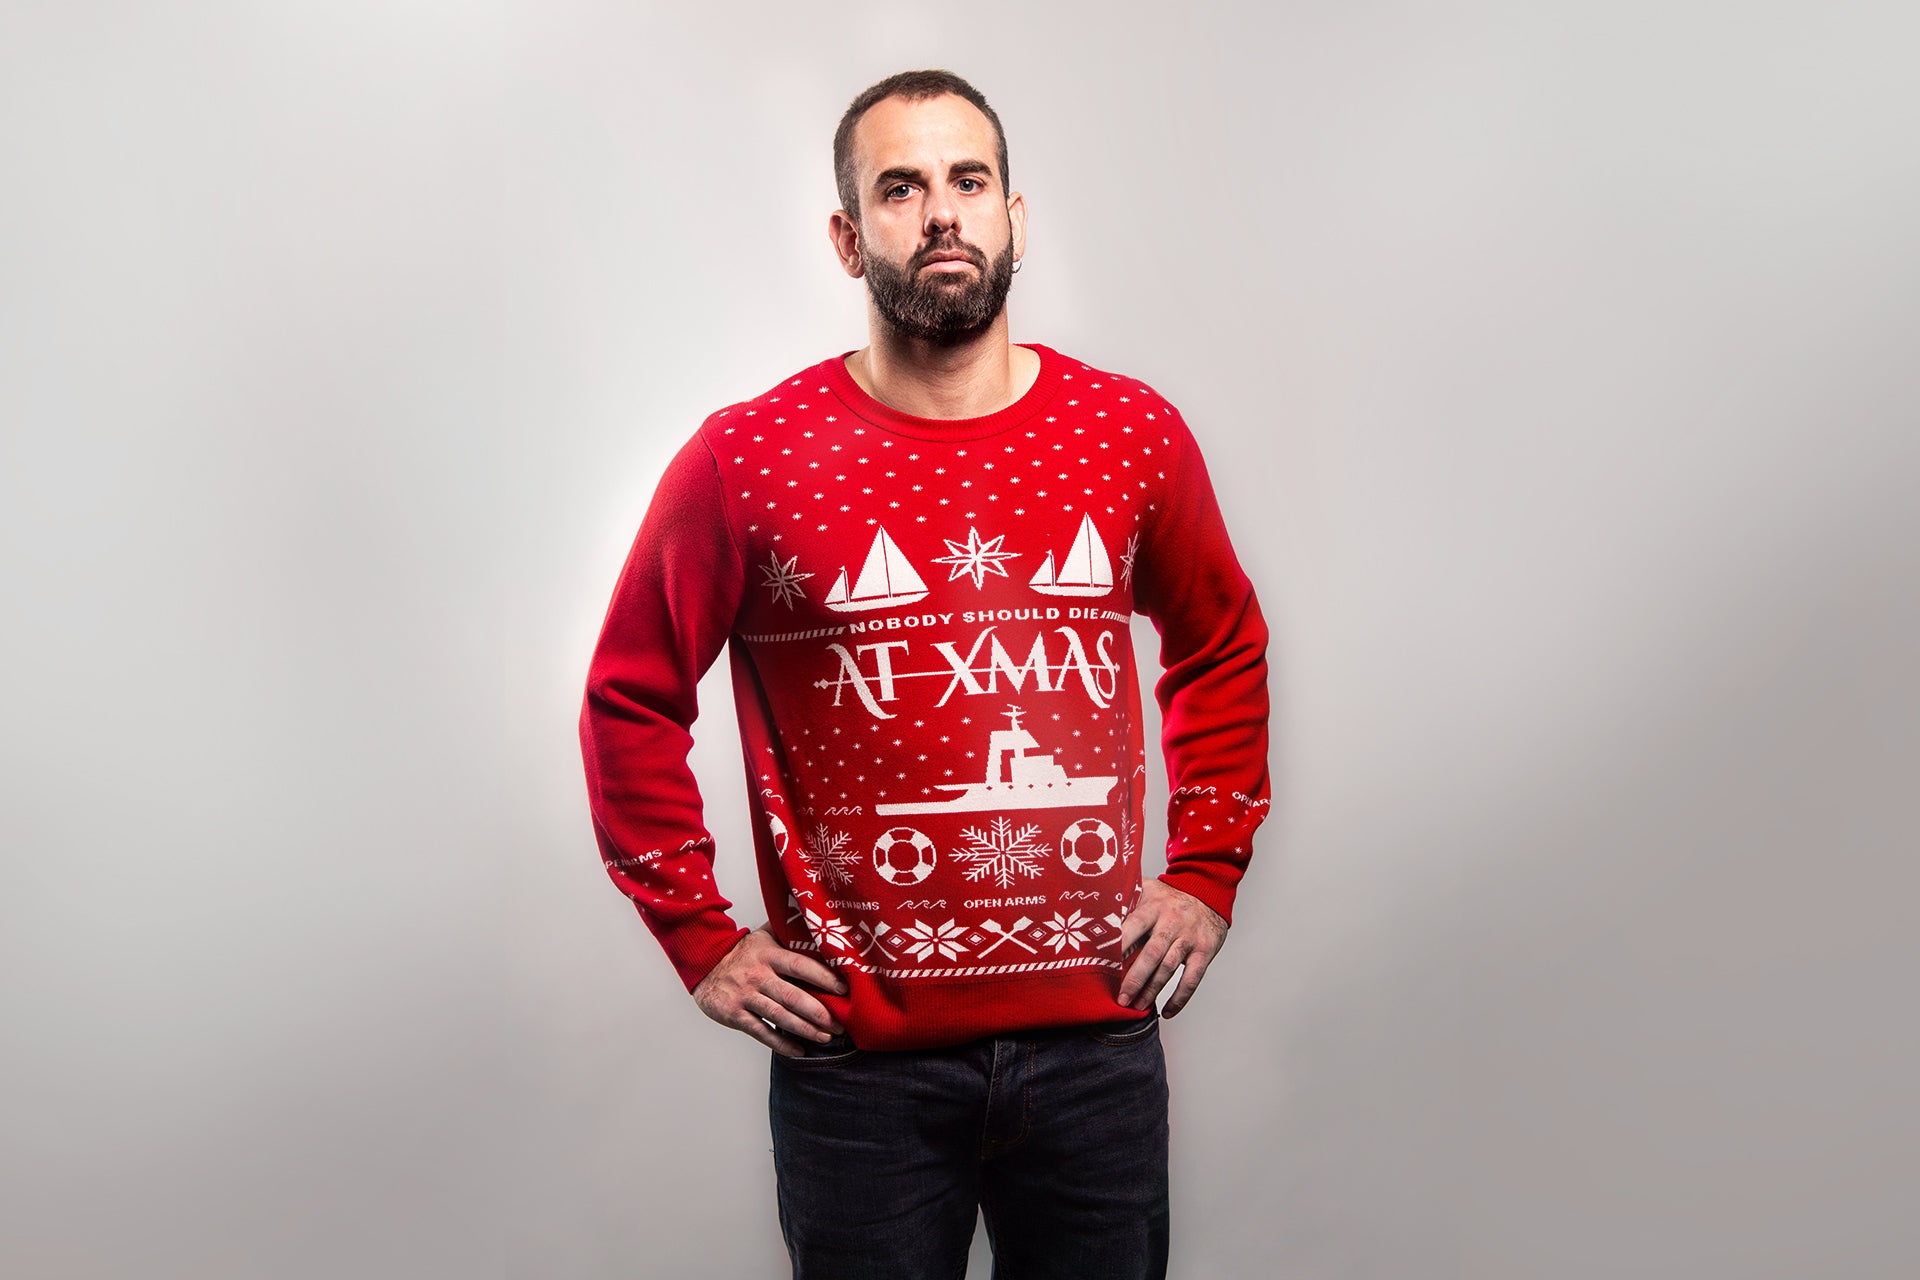 Christmas jumper “Nobody should die at Xmas”.
